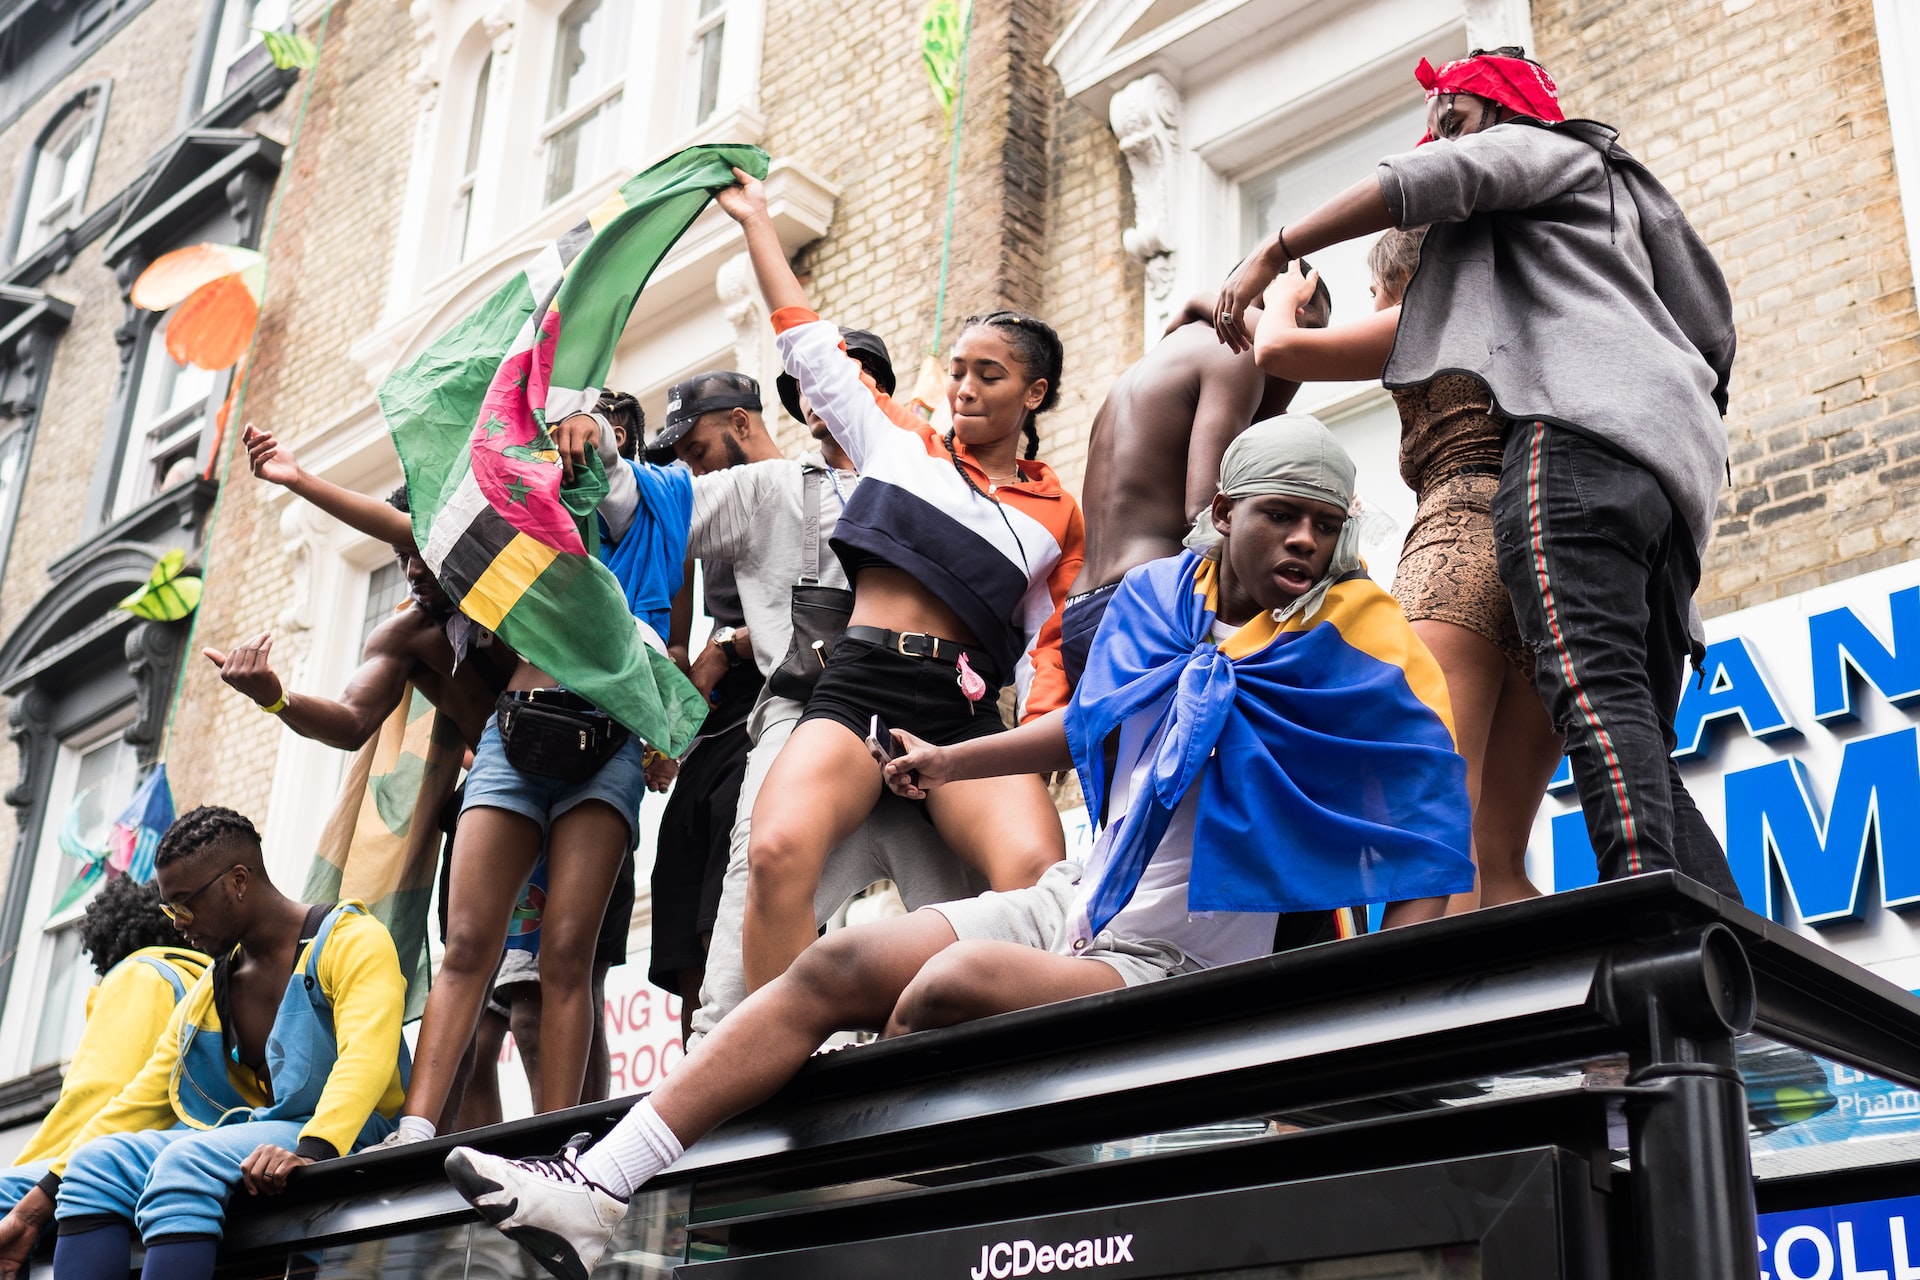 Carnaval em outros países - notting hill, Inglaterra